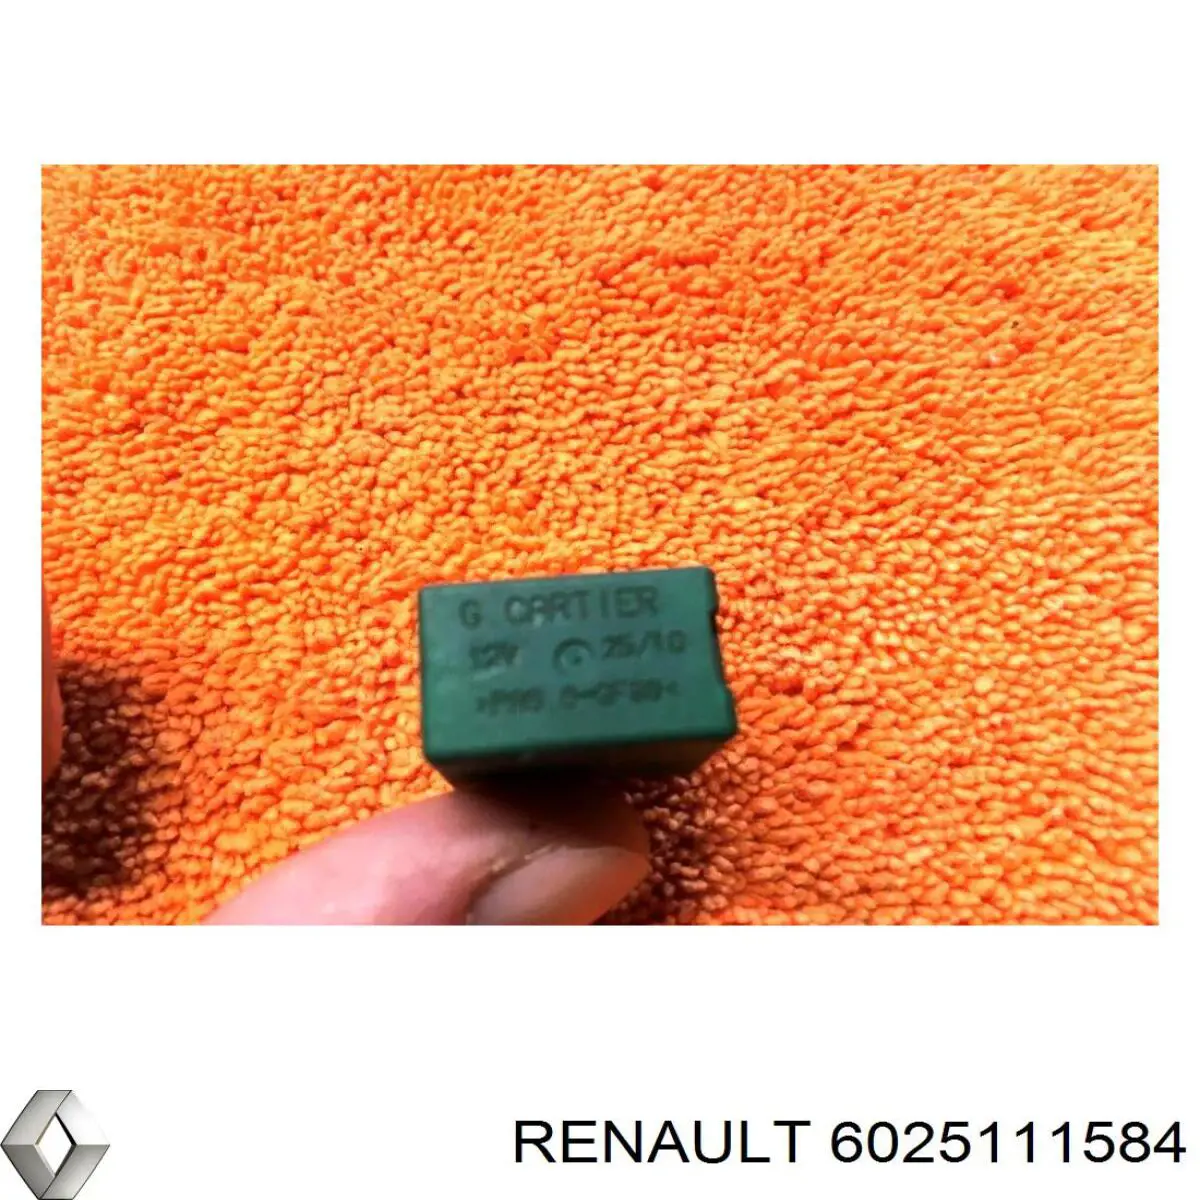 6025111584 Renault (RVI) relé eléctrico multifuncional